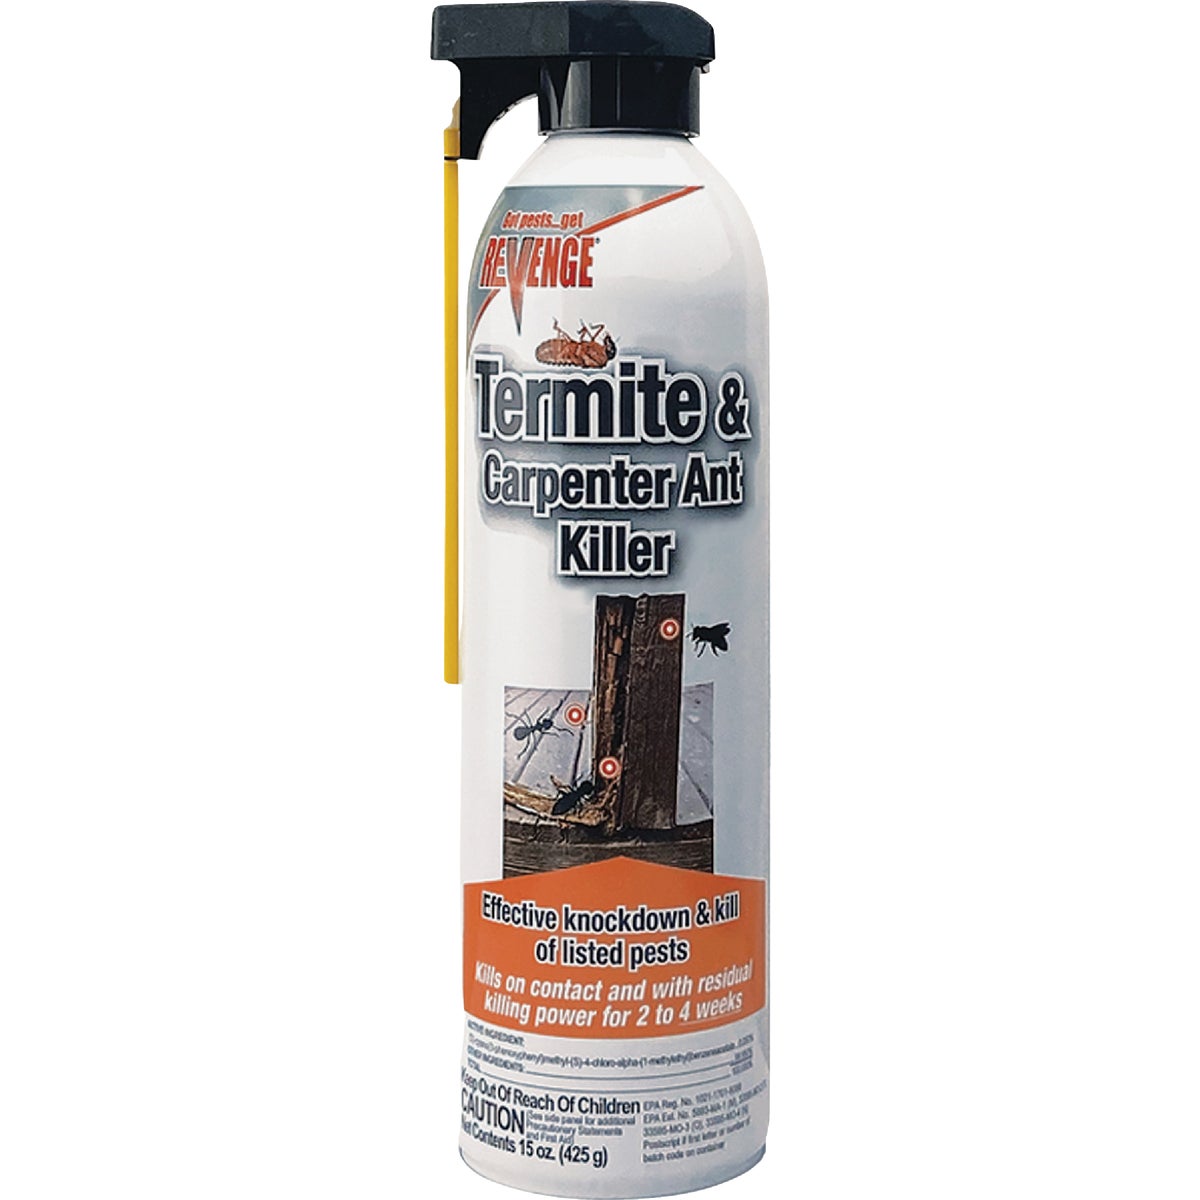 Item 760260, Termite &amp; Carpenter Ant Killer Ready-to-Use Aerosol Spray from Revenge